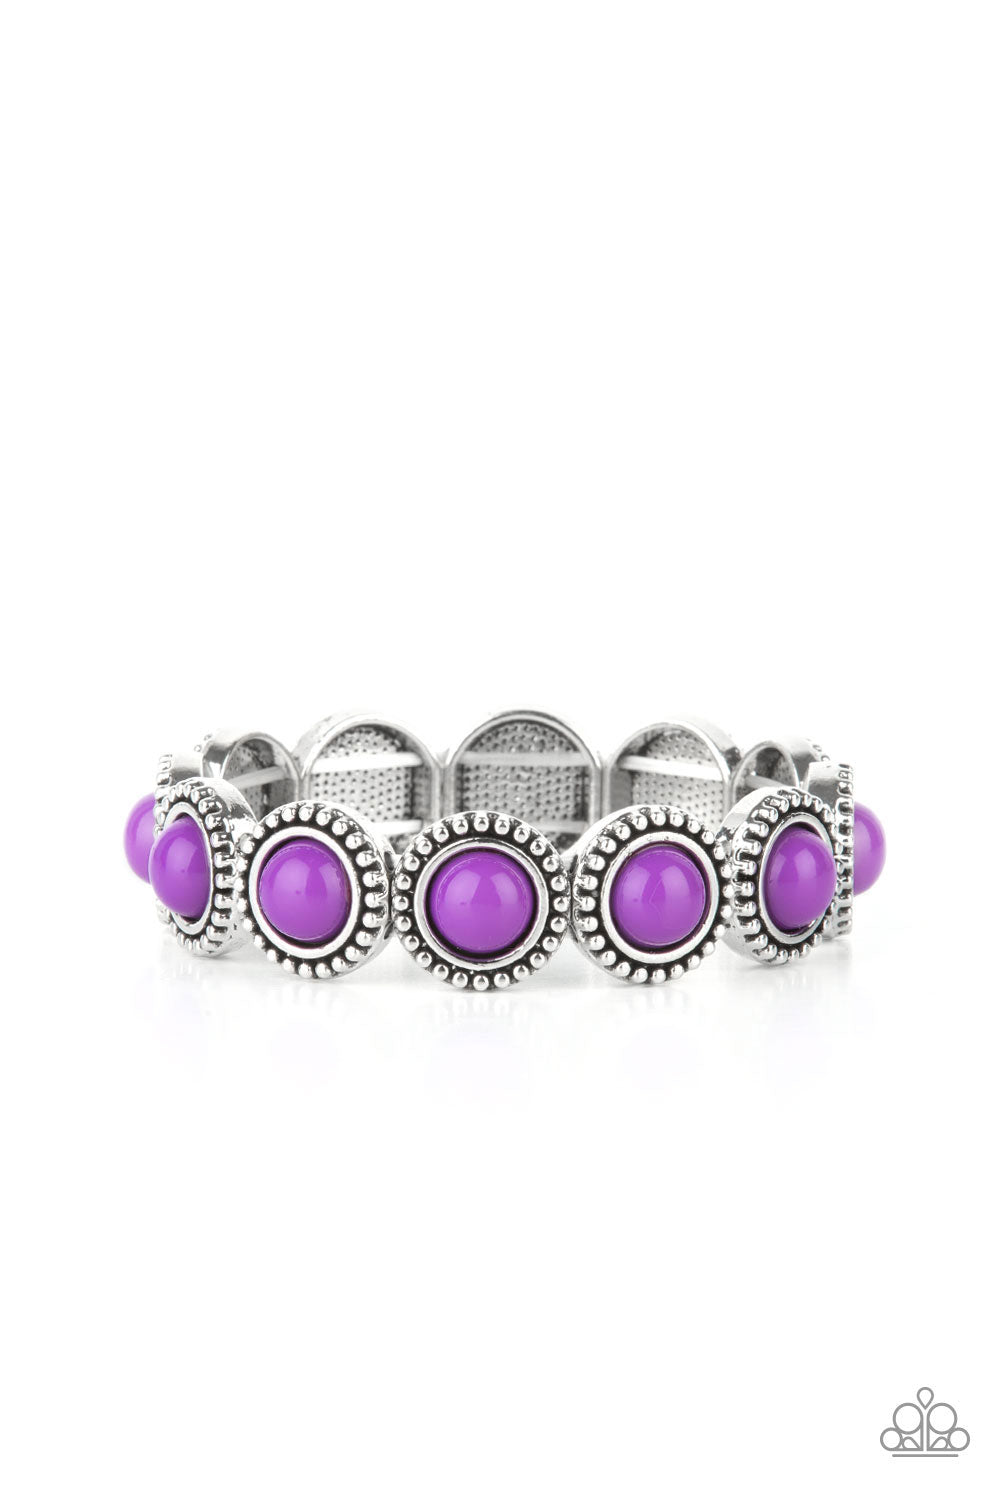 antiqued silver studded edge, silver frames encase polished purple beads